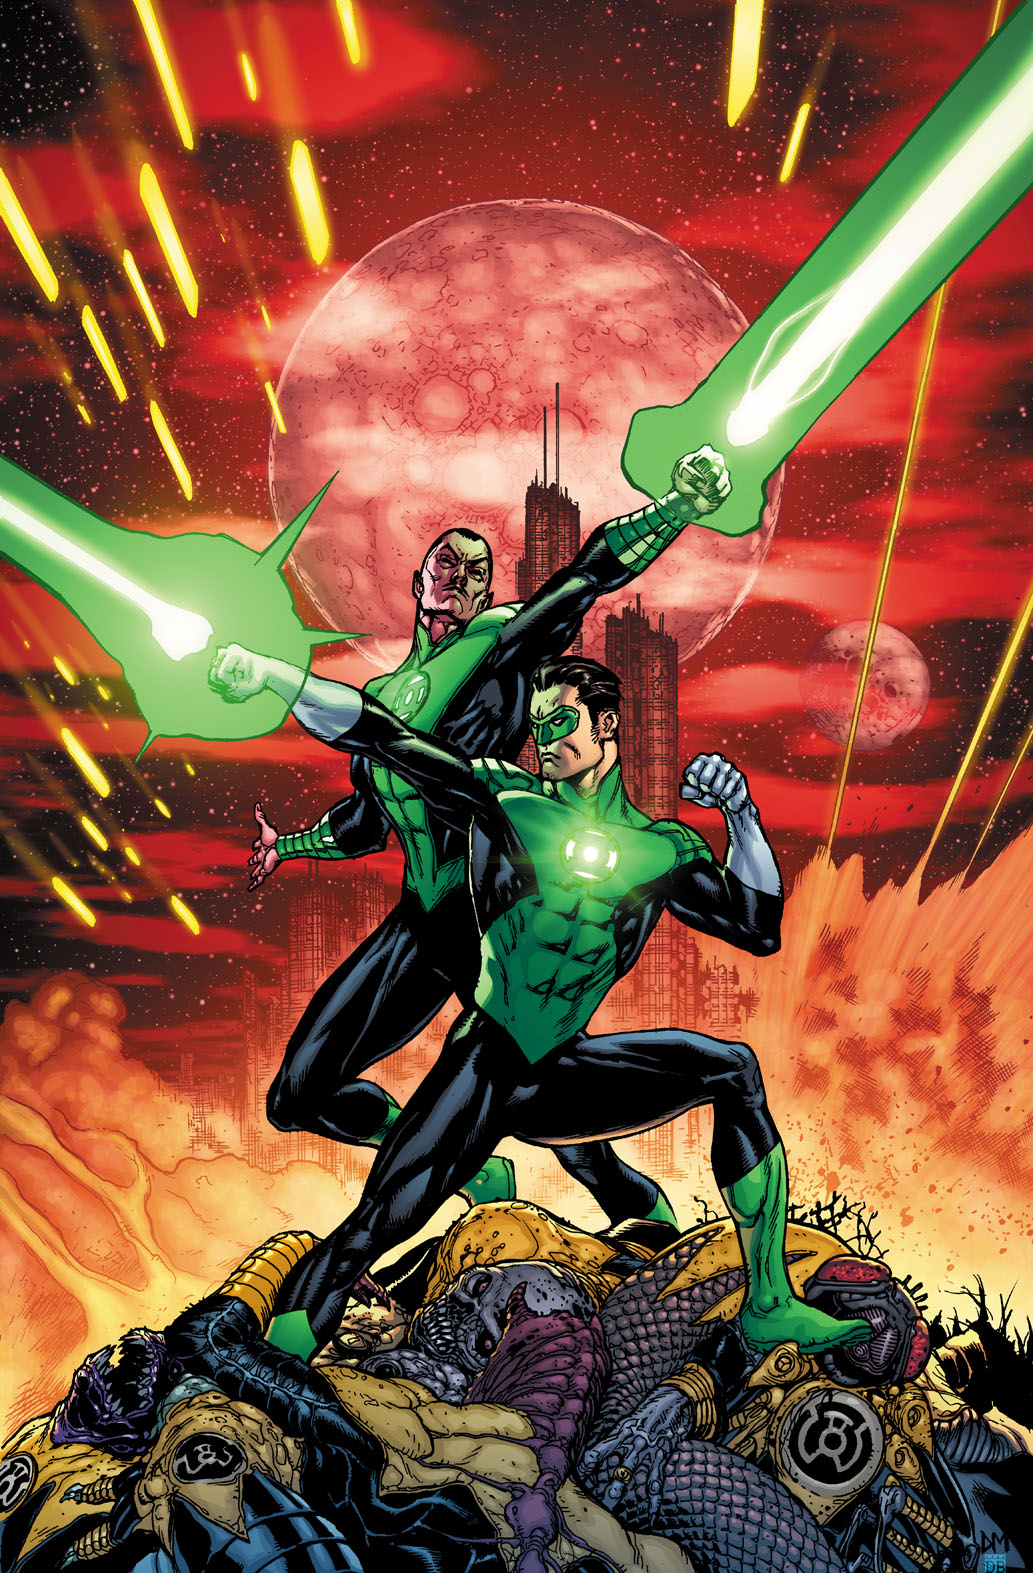 DC Comics "New 52" Green Lantern